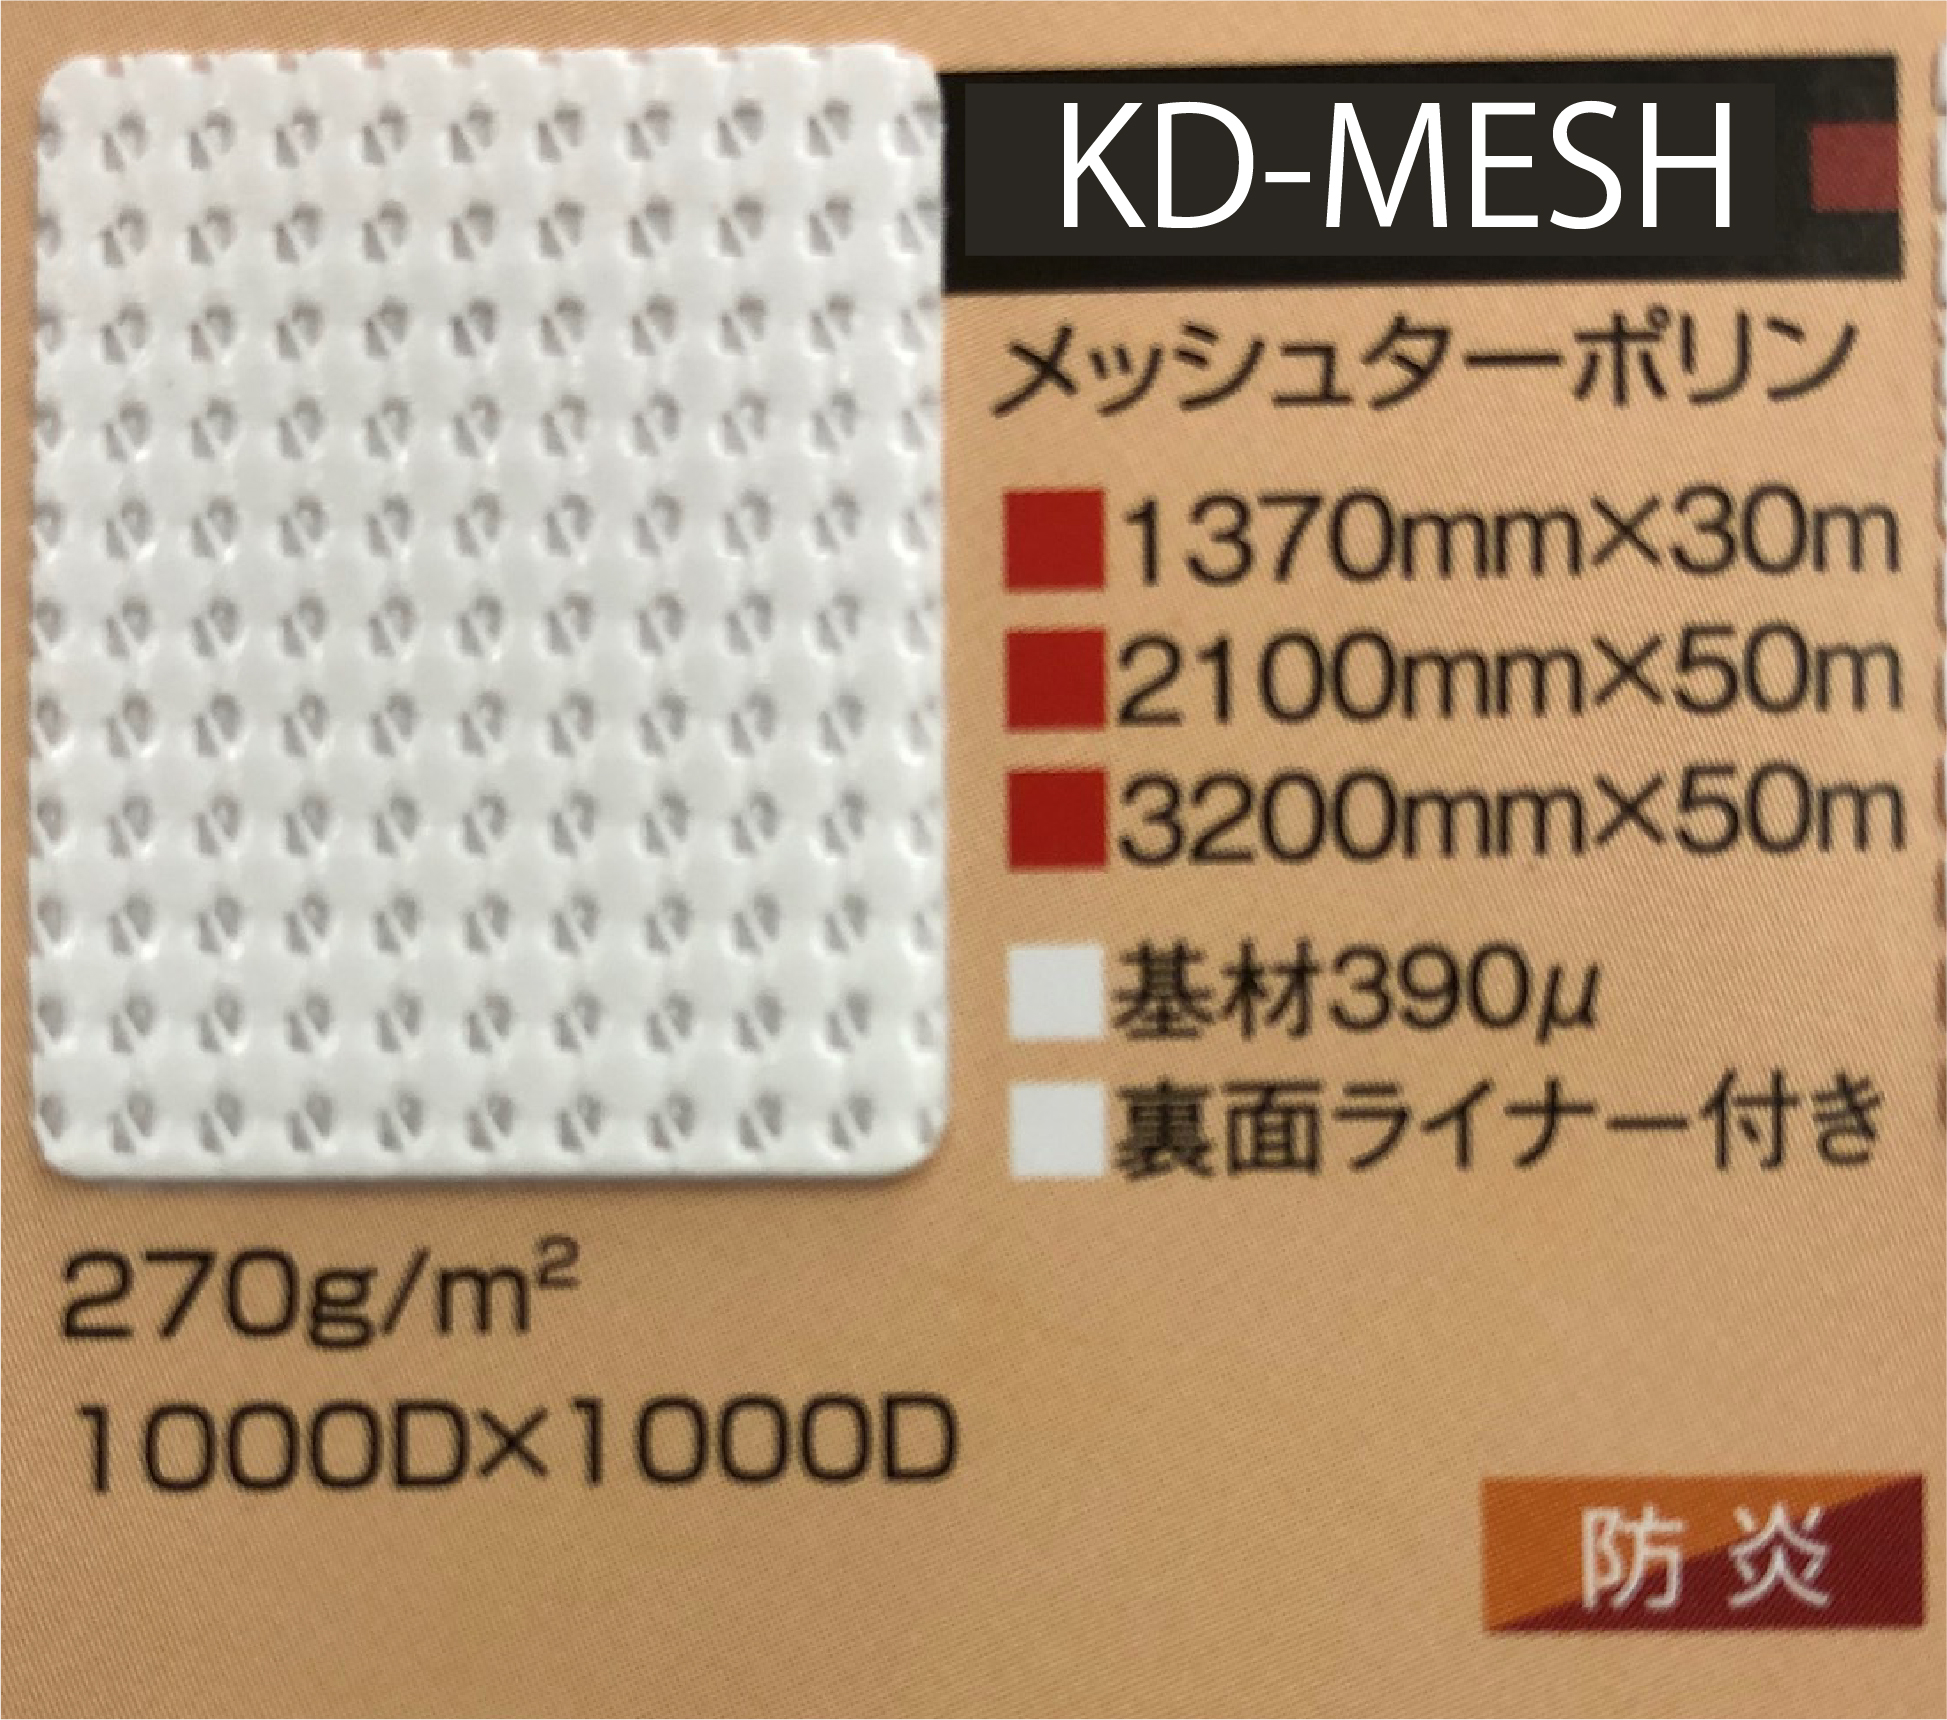 KD-MESH（メッシュターポリン防炎/裏紙セパ付き） 2100mm×50m